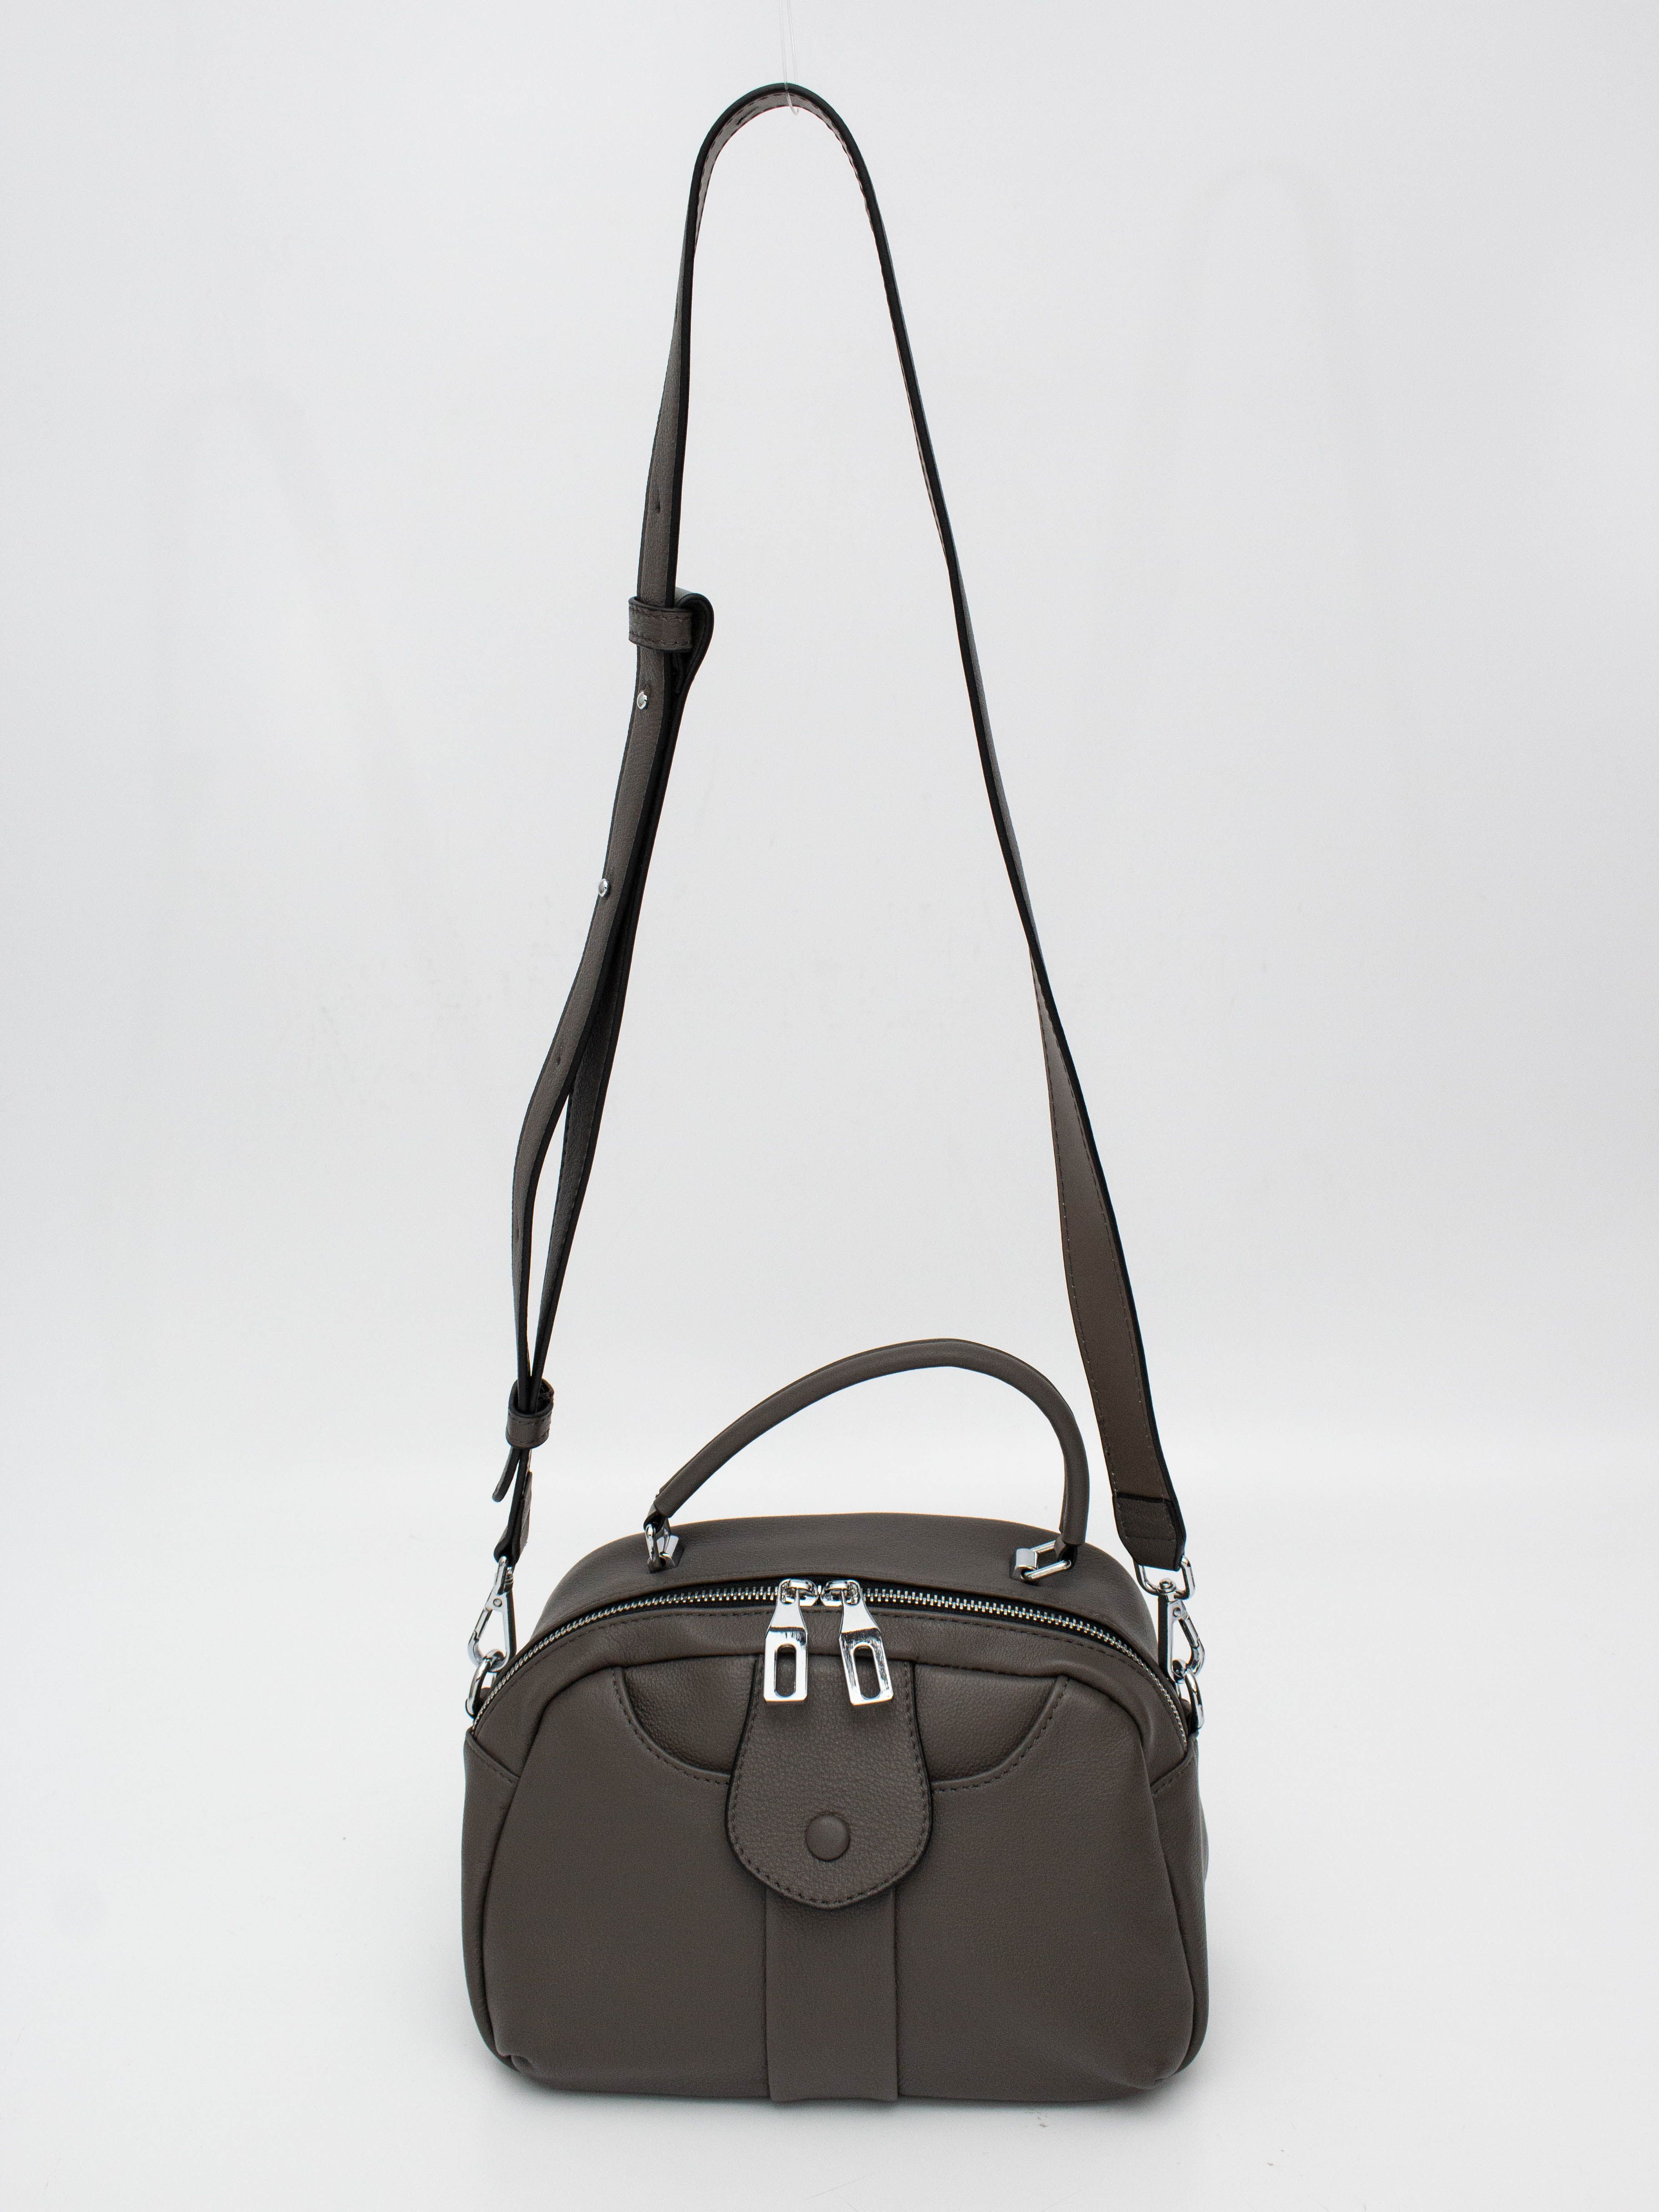 350-88 сумка  жен. дем. натуральная кожа/текстиль серый Polina&Eiterou